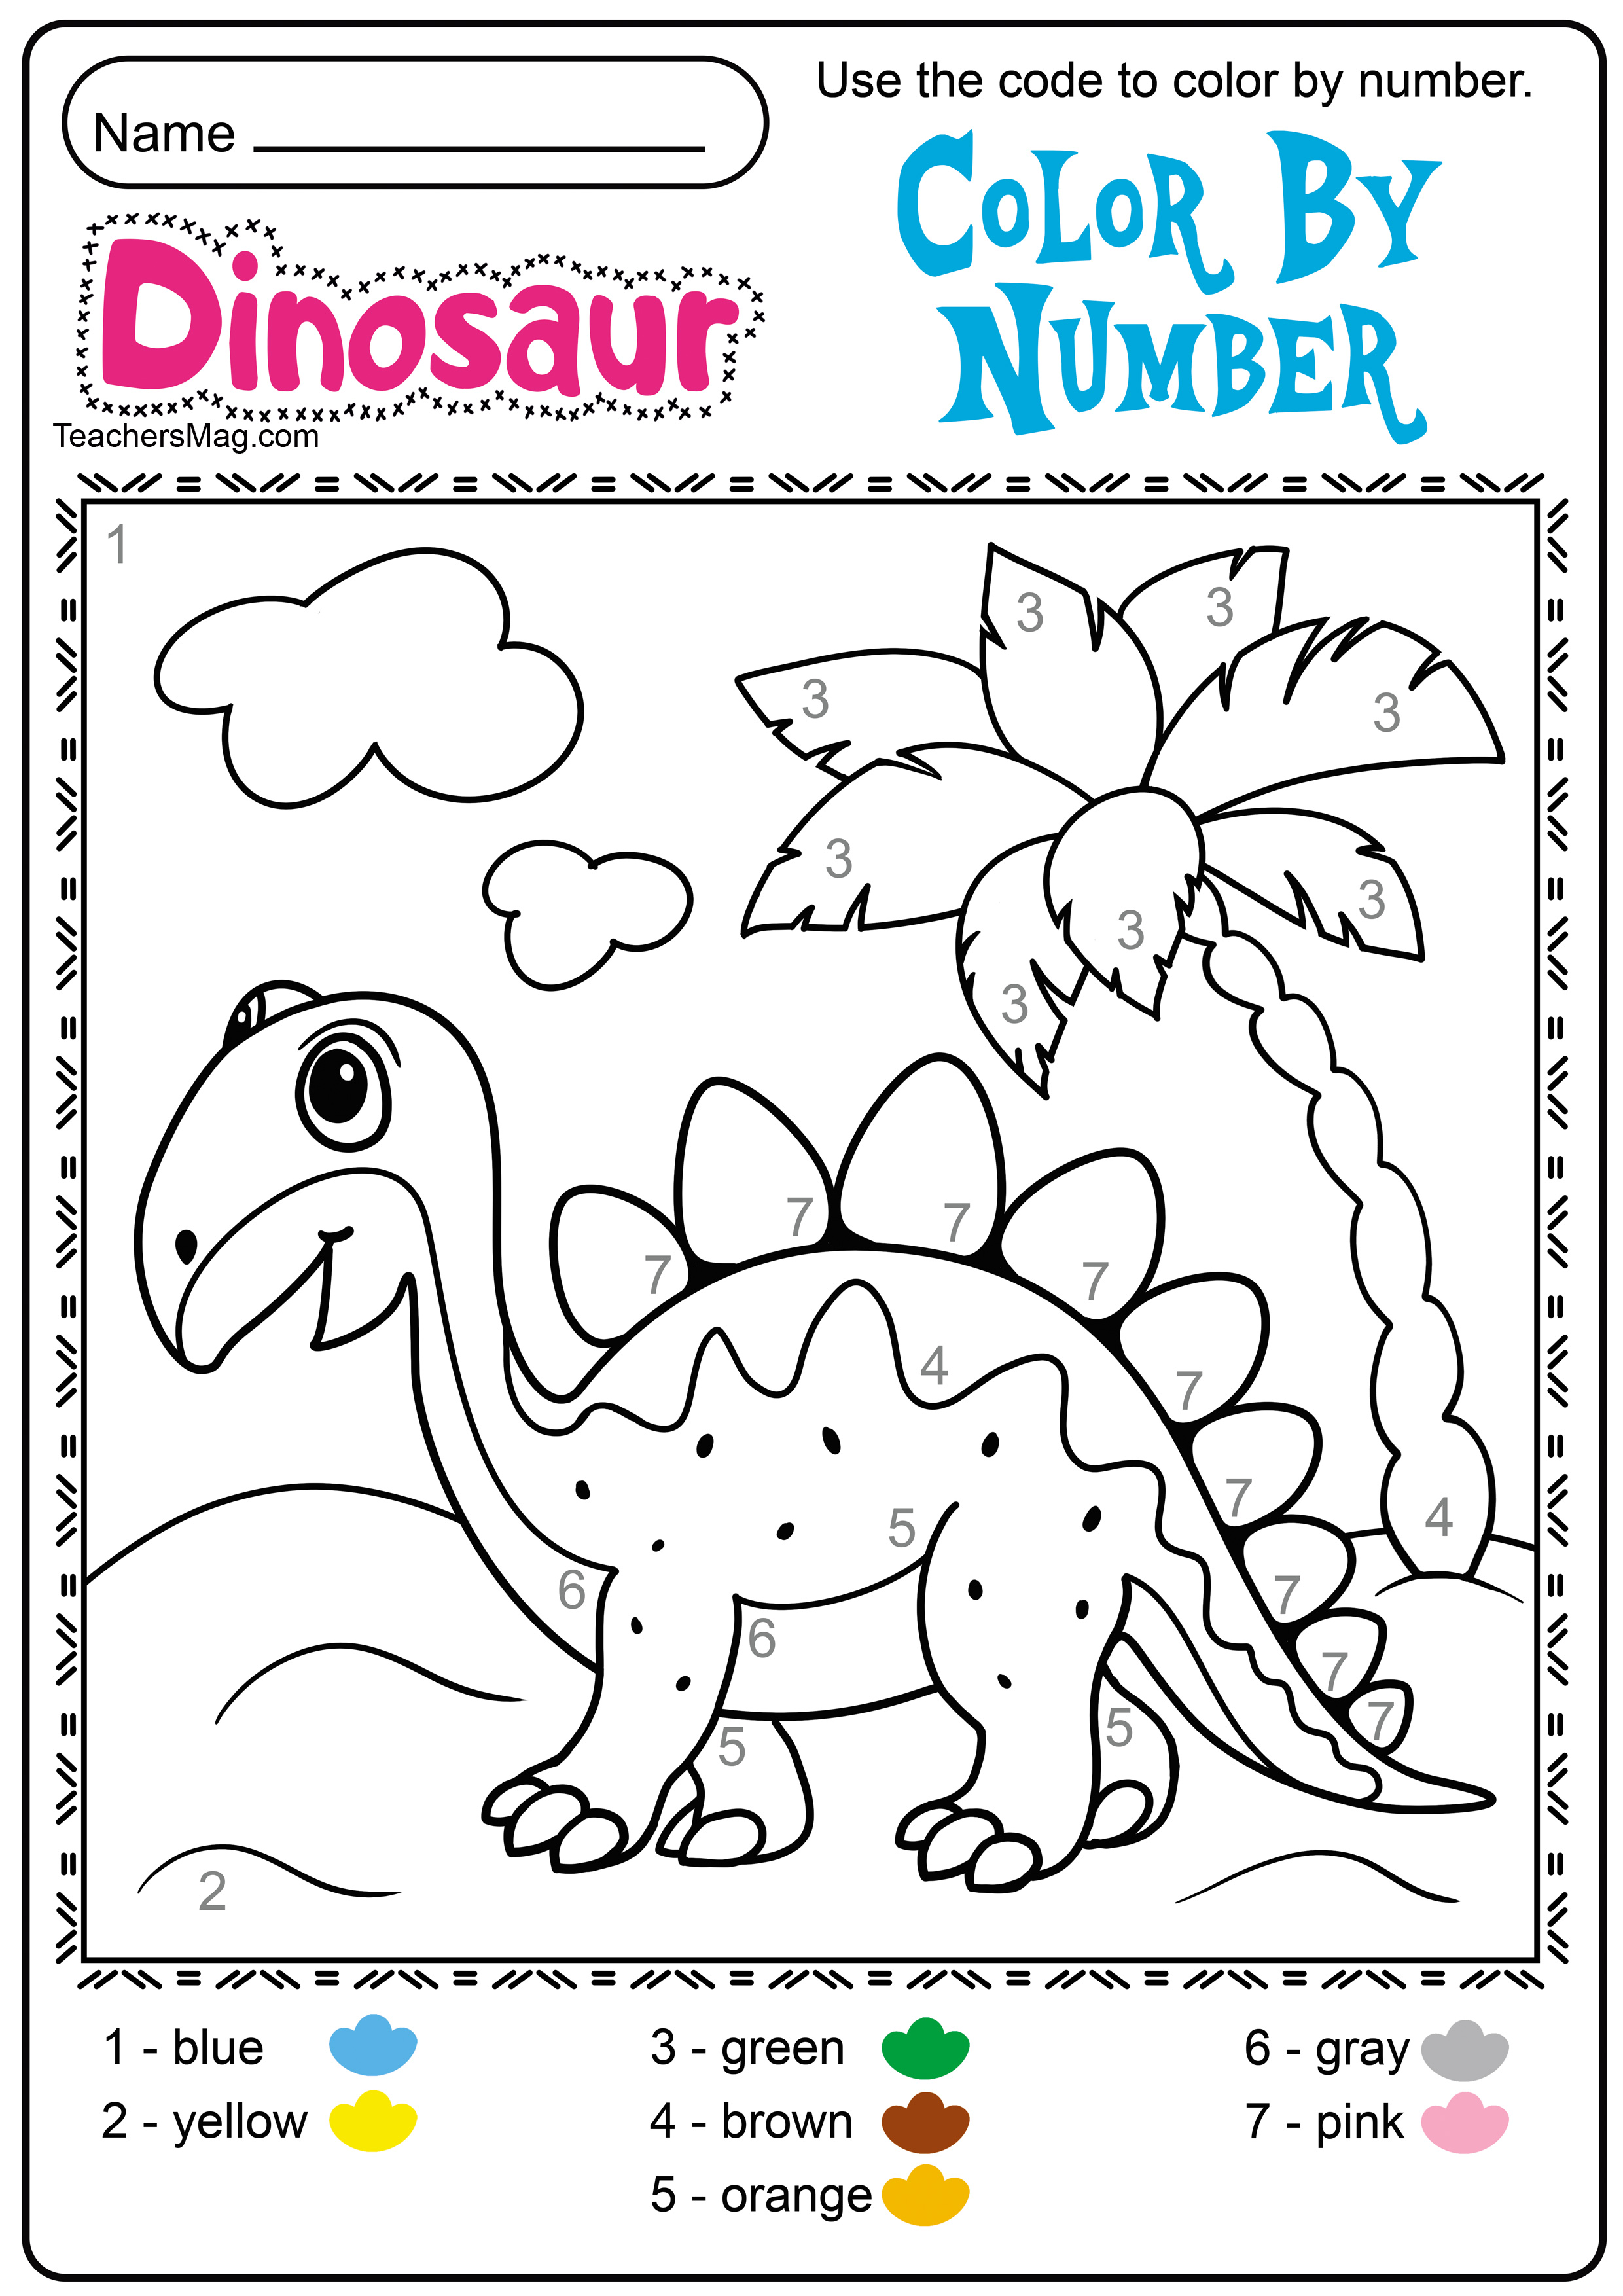 Free Dinosaur Printables for Preschool | TeachersMag.com